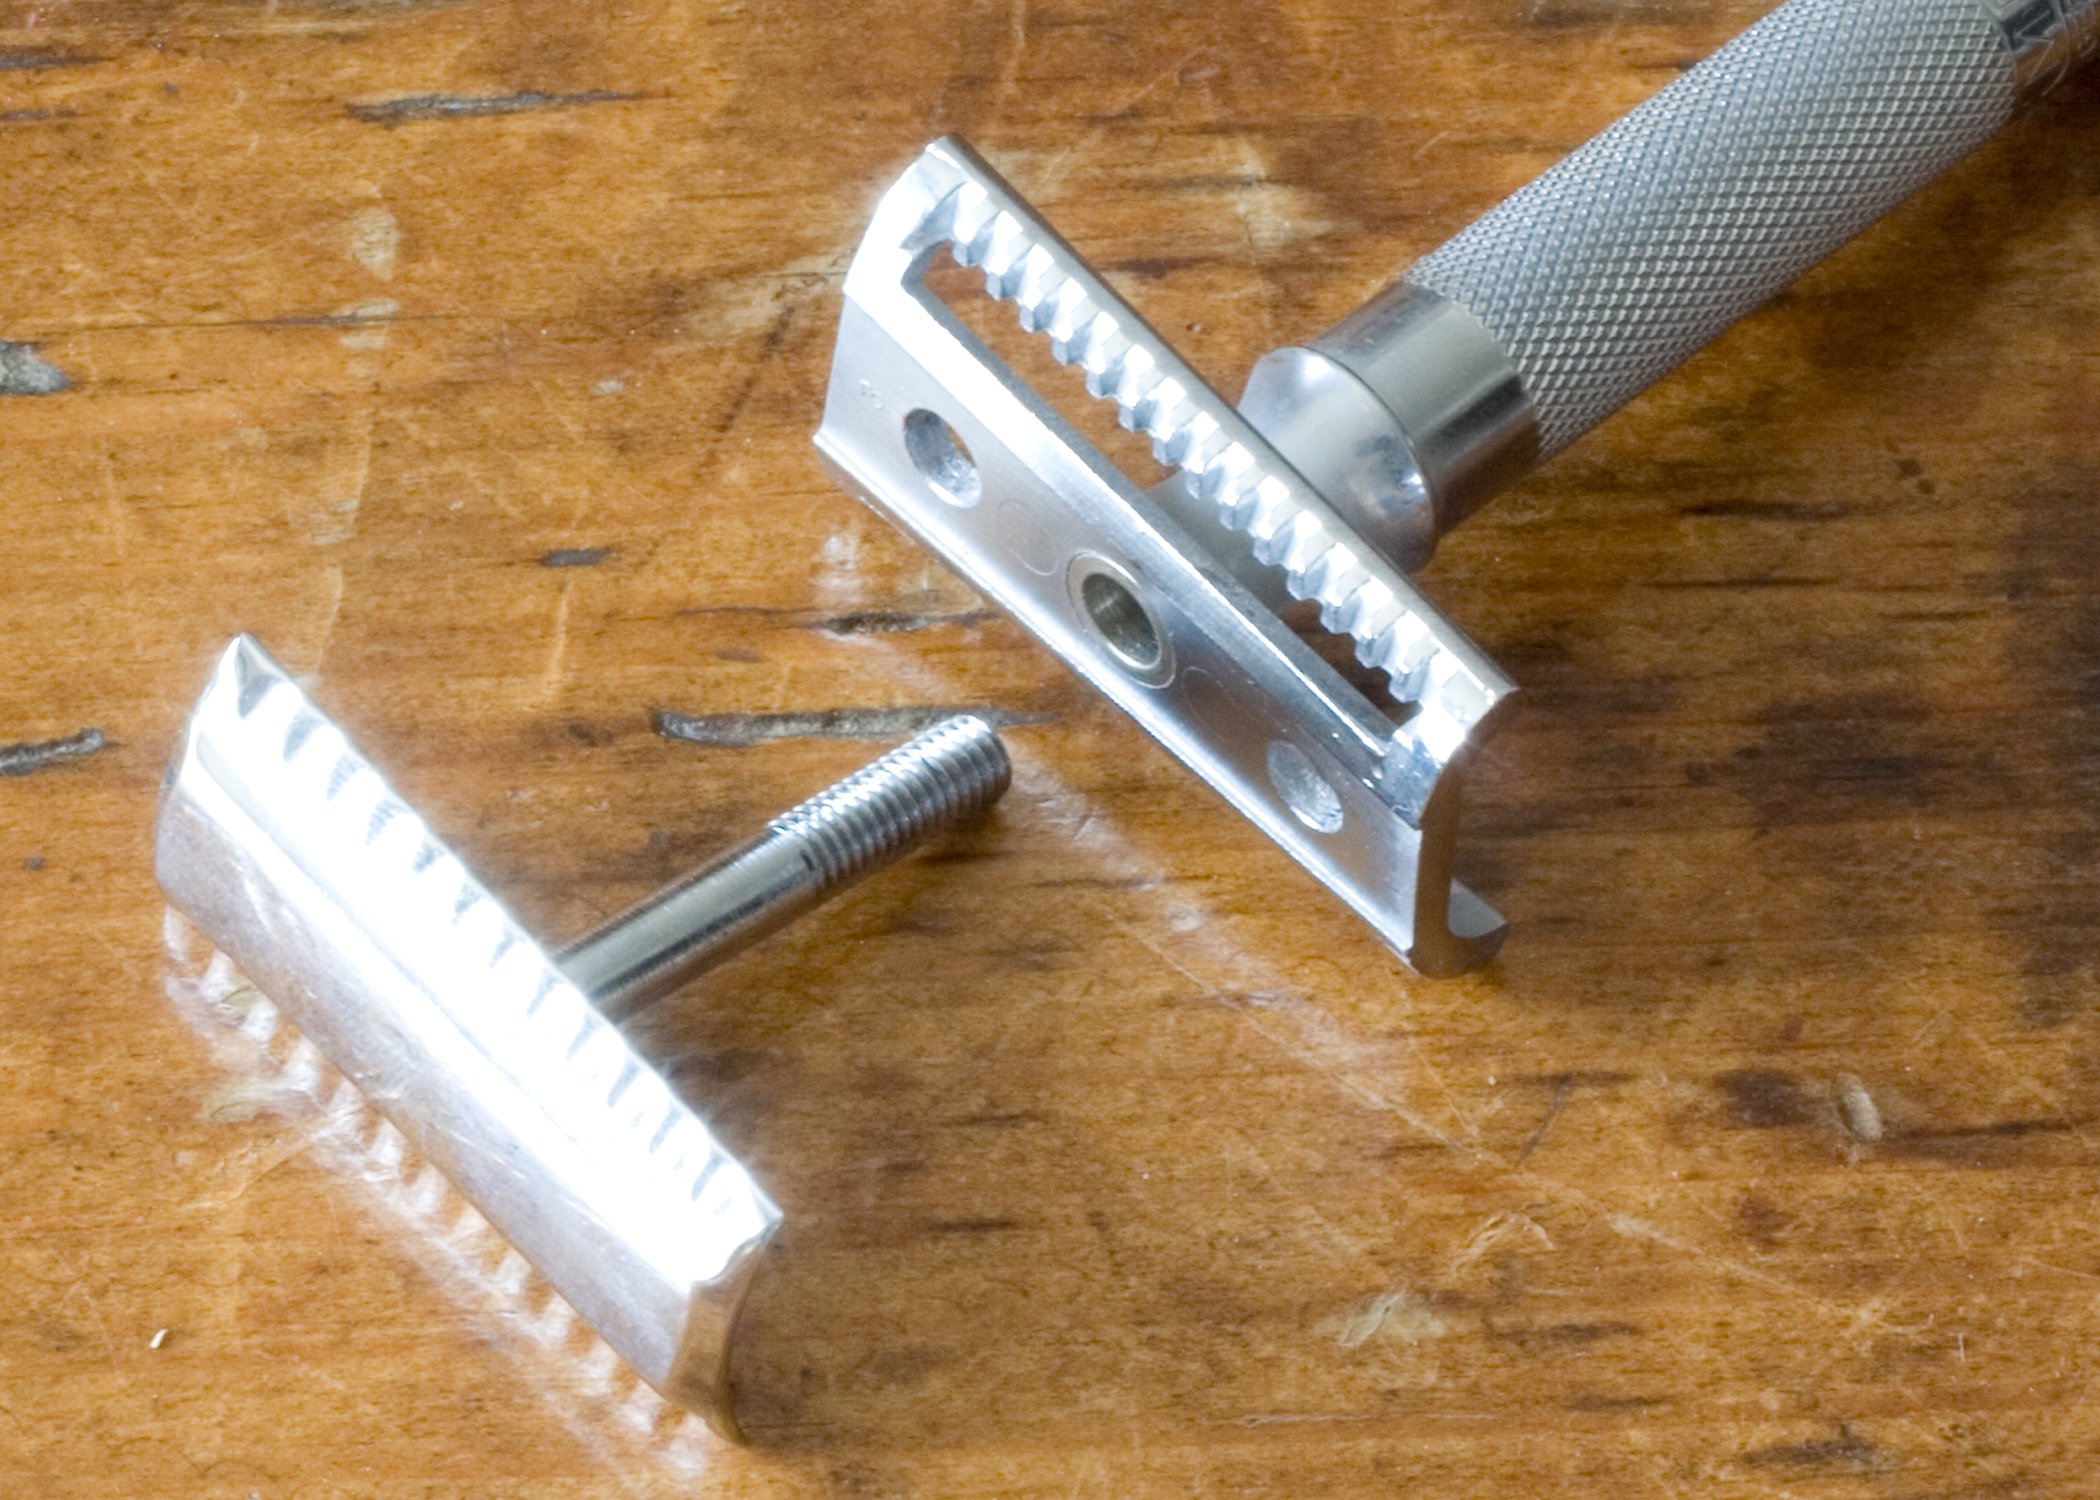 The Two Piece safety razor Design